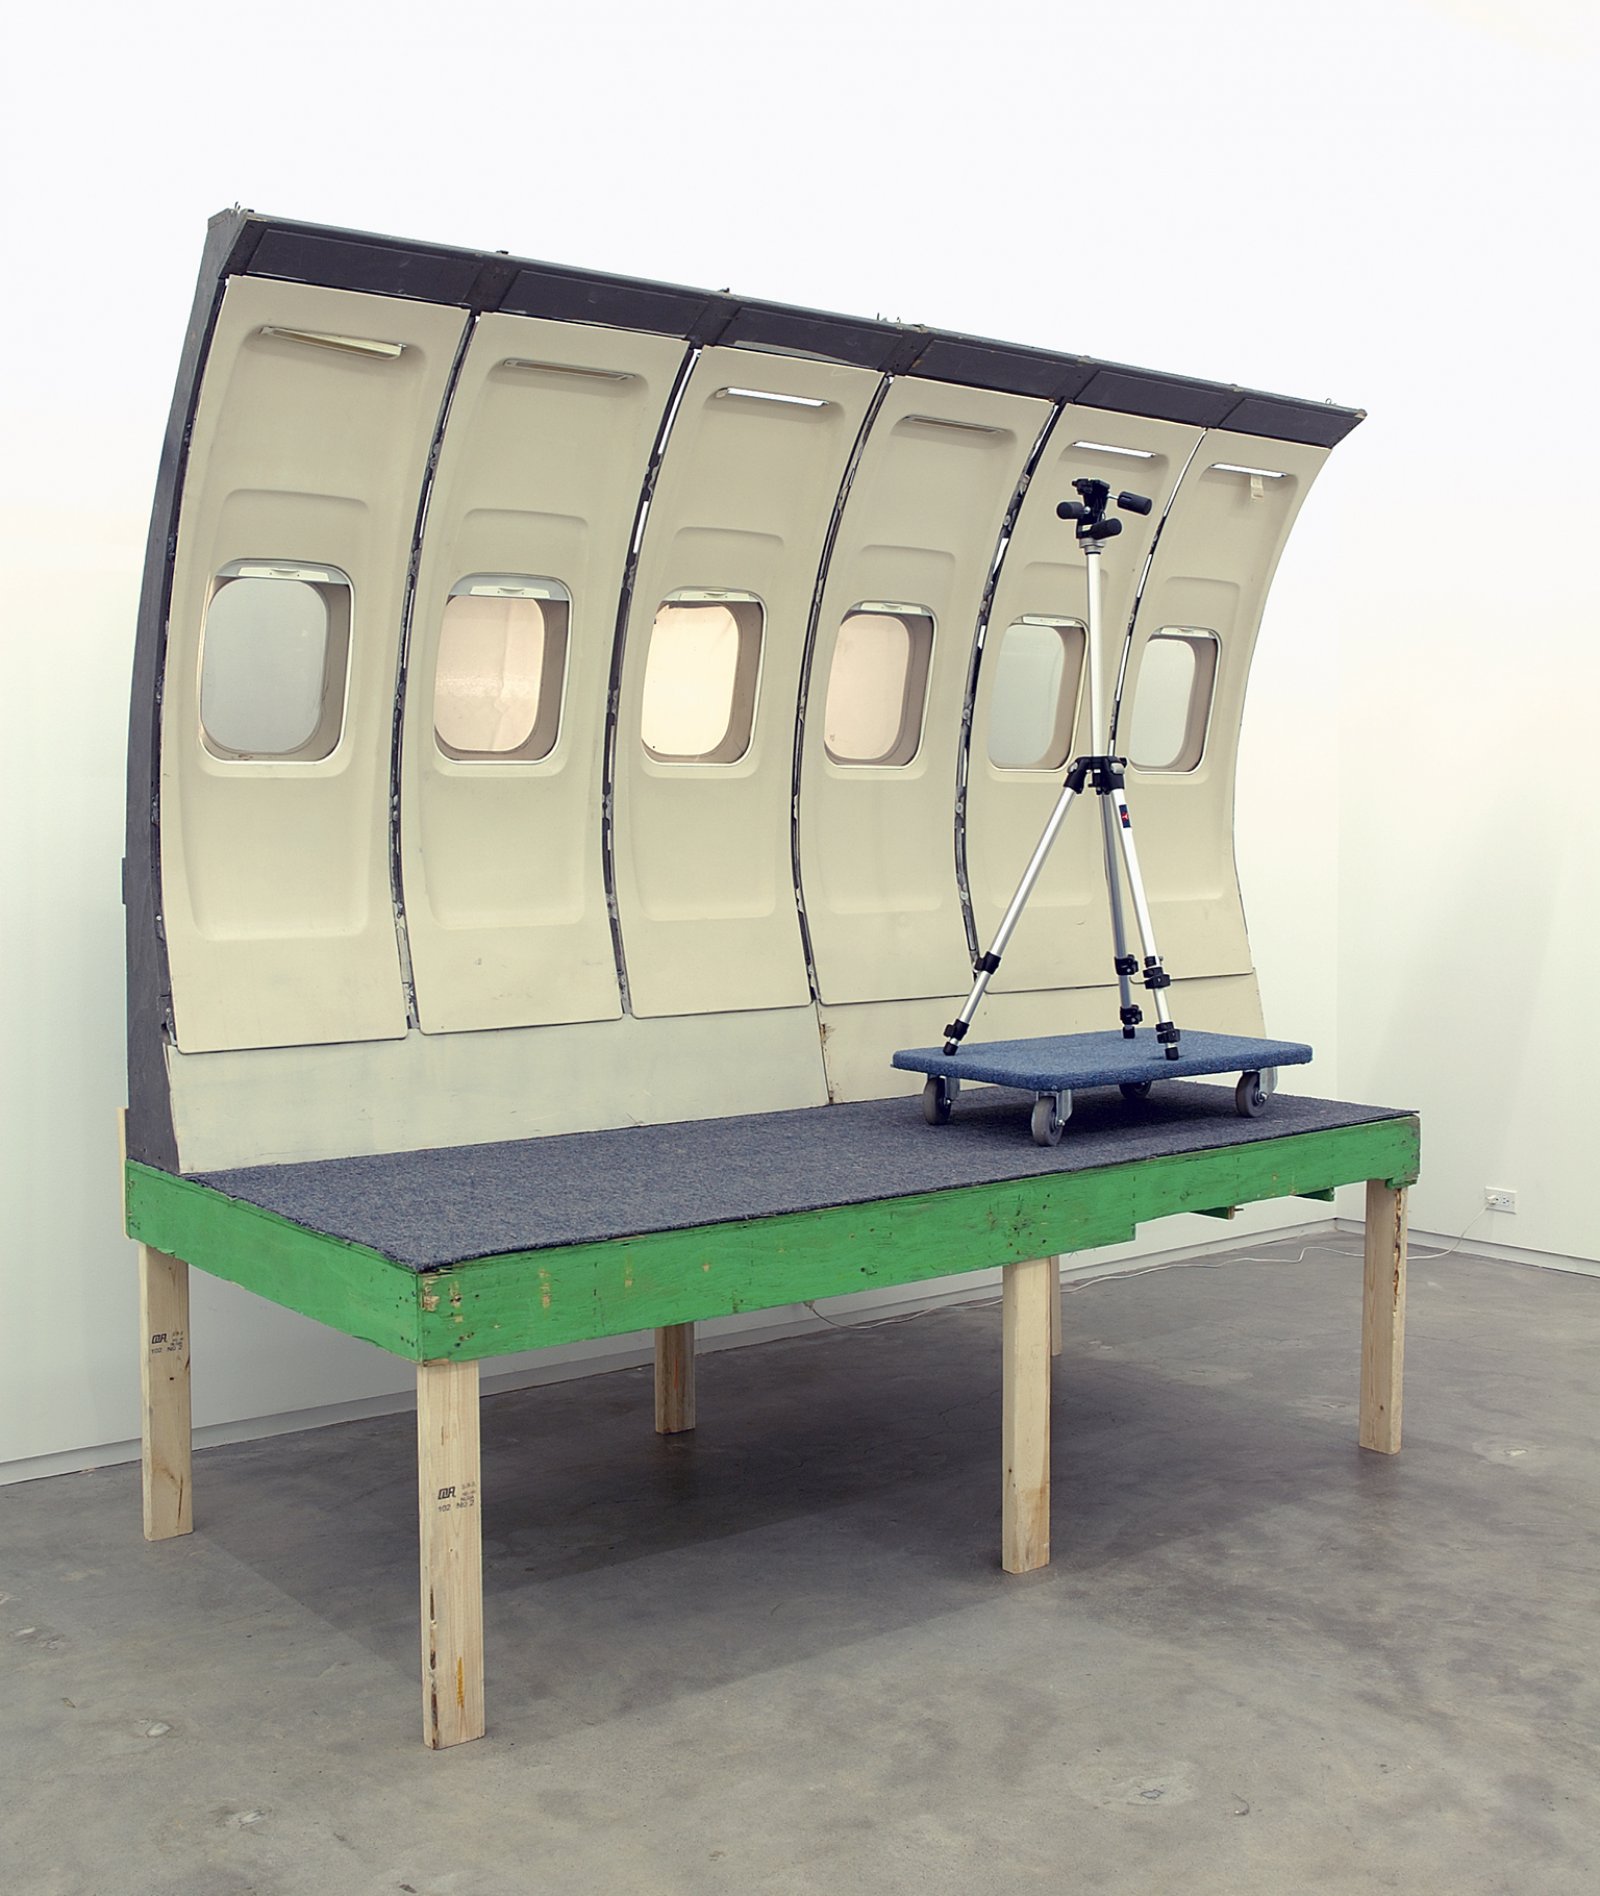 Geoffrey Farmer, installation view, Airliner Open Studio, Catriona Jeffries, 2006 by Geoffrey Farmer